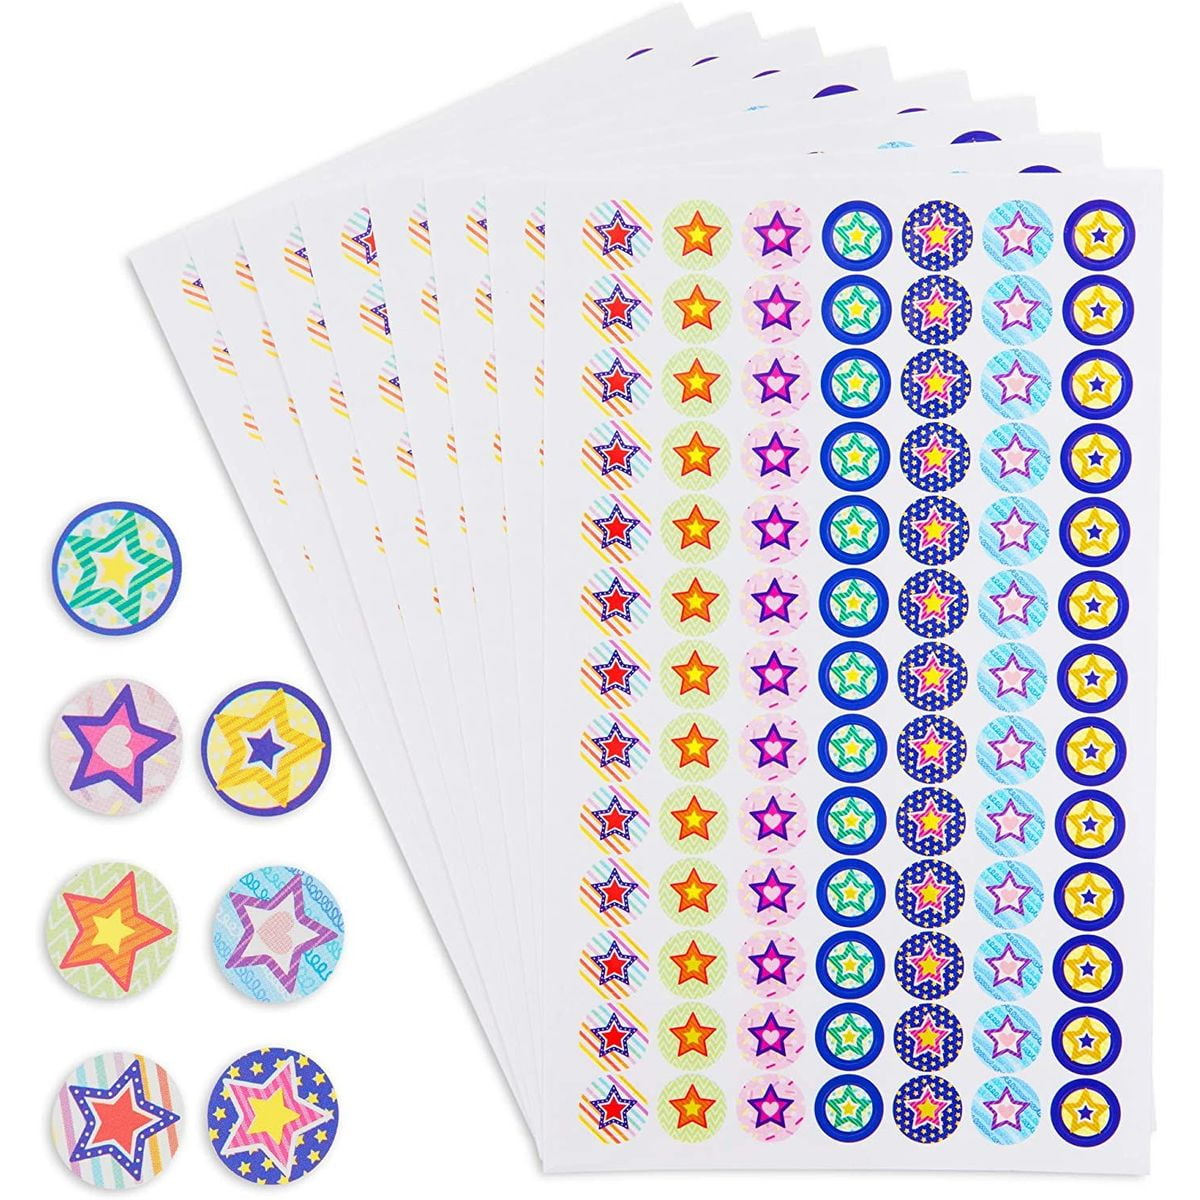 420 Star Stickers - Reward Chart Stickers - 6 sheets - Teacher Stickers -  Gold Star Stickers - School Supplies - Homework Marking Stickers